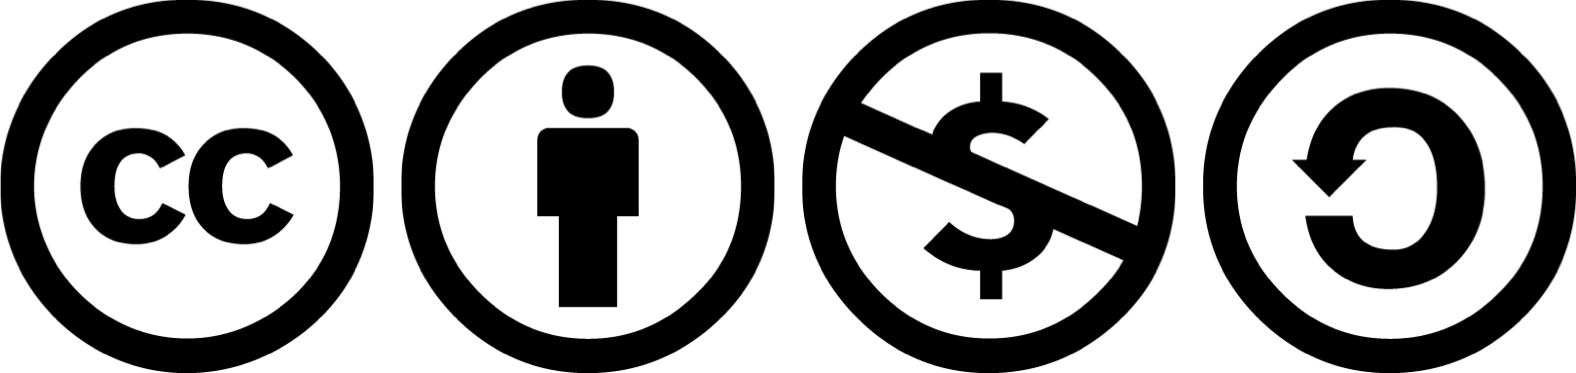 Creative Commons License logo